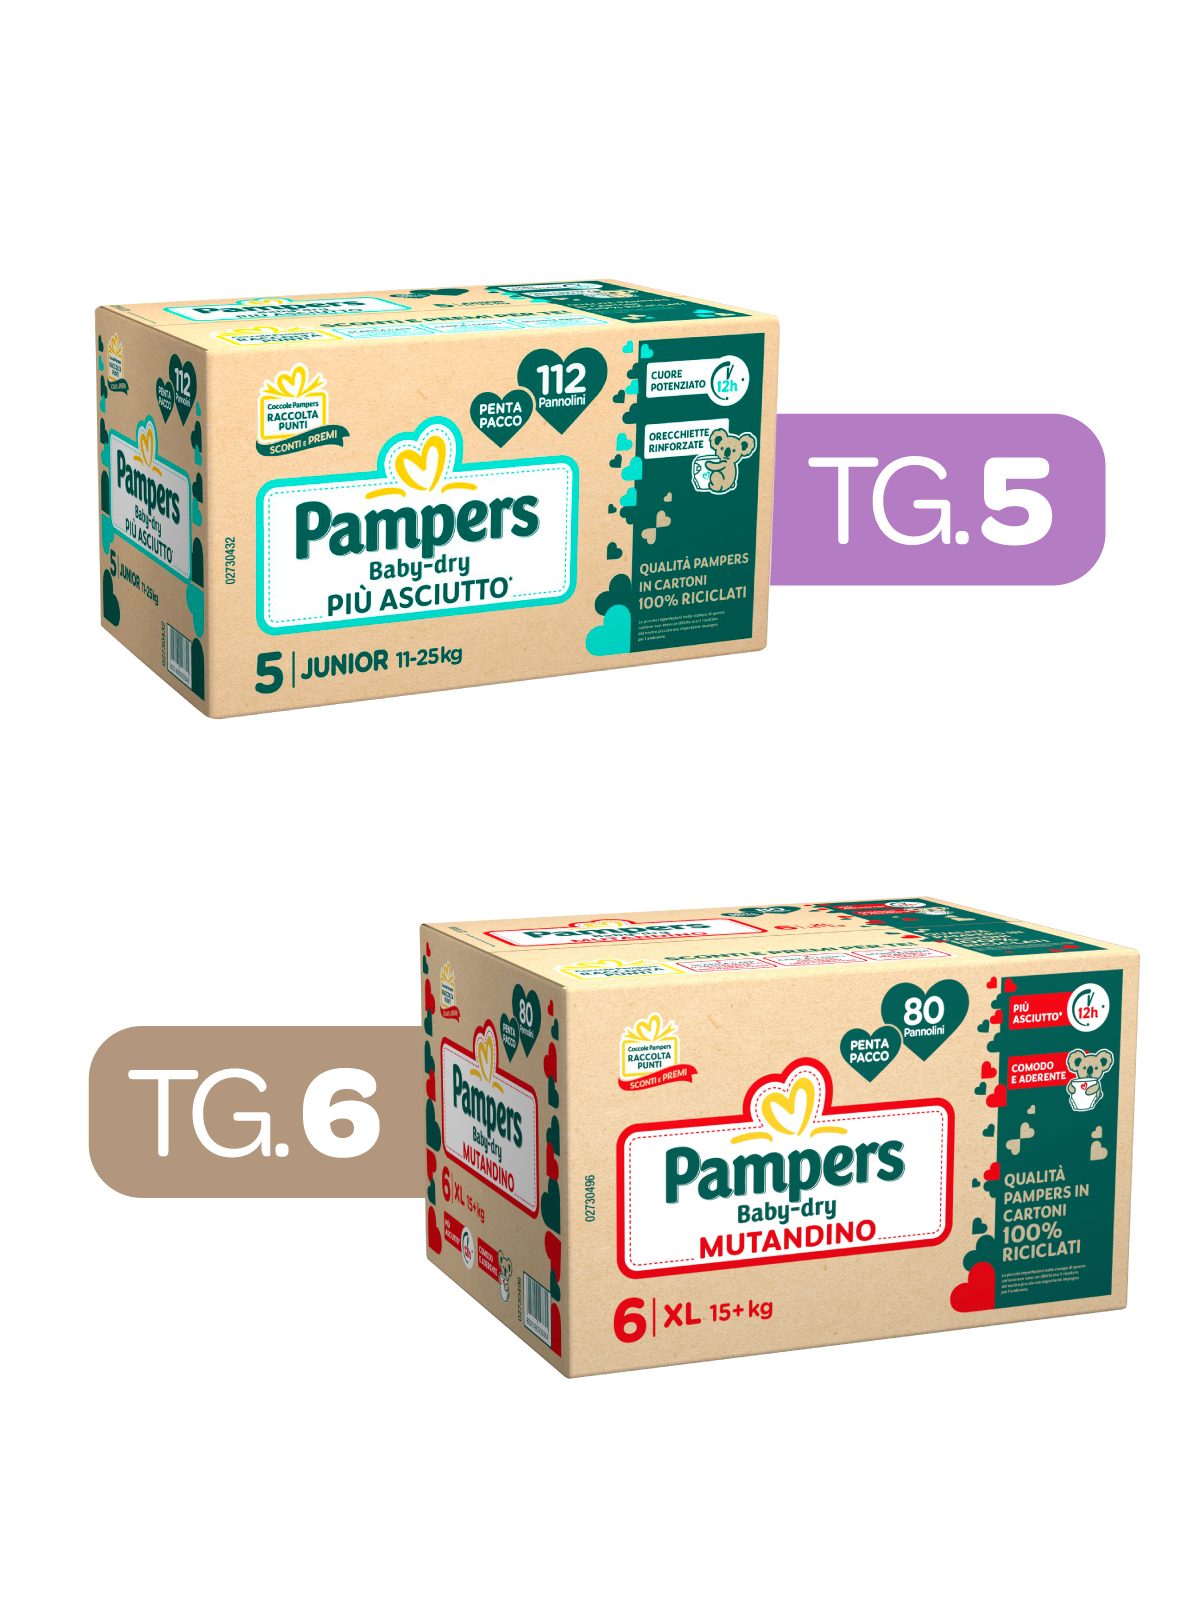 Pampers – baby dry tradizionale tg. 5 x112 pz + mutandino baby dry tg. 6 x80 pz - 